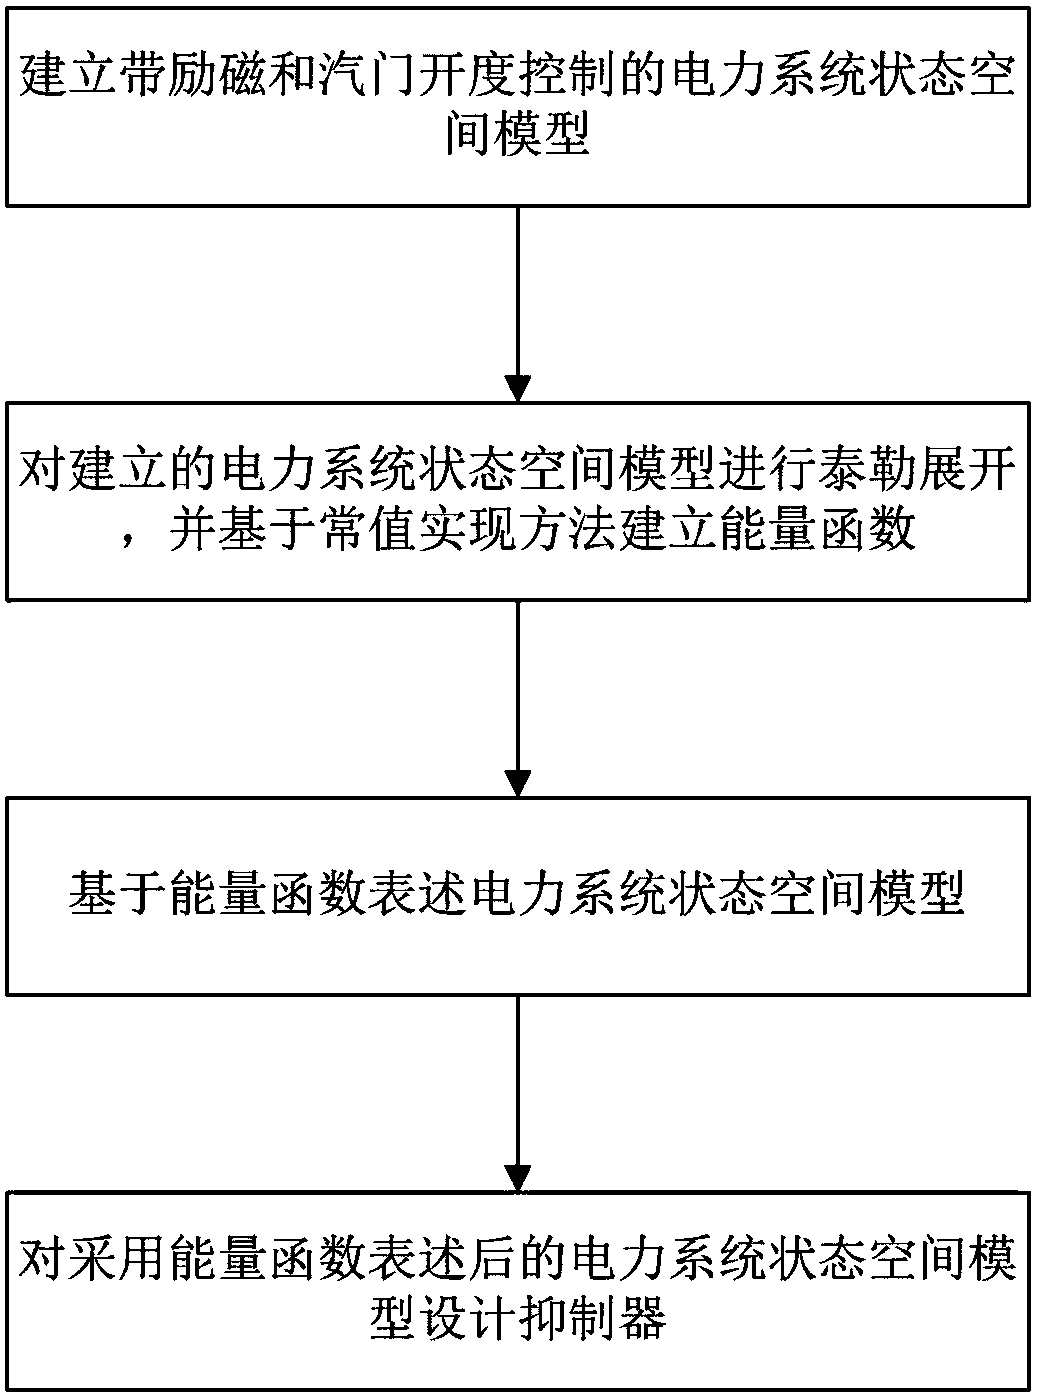 Method of Designing Suppressor Based on Energy Function